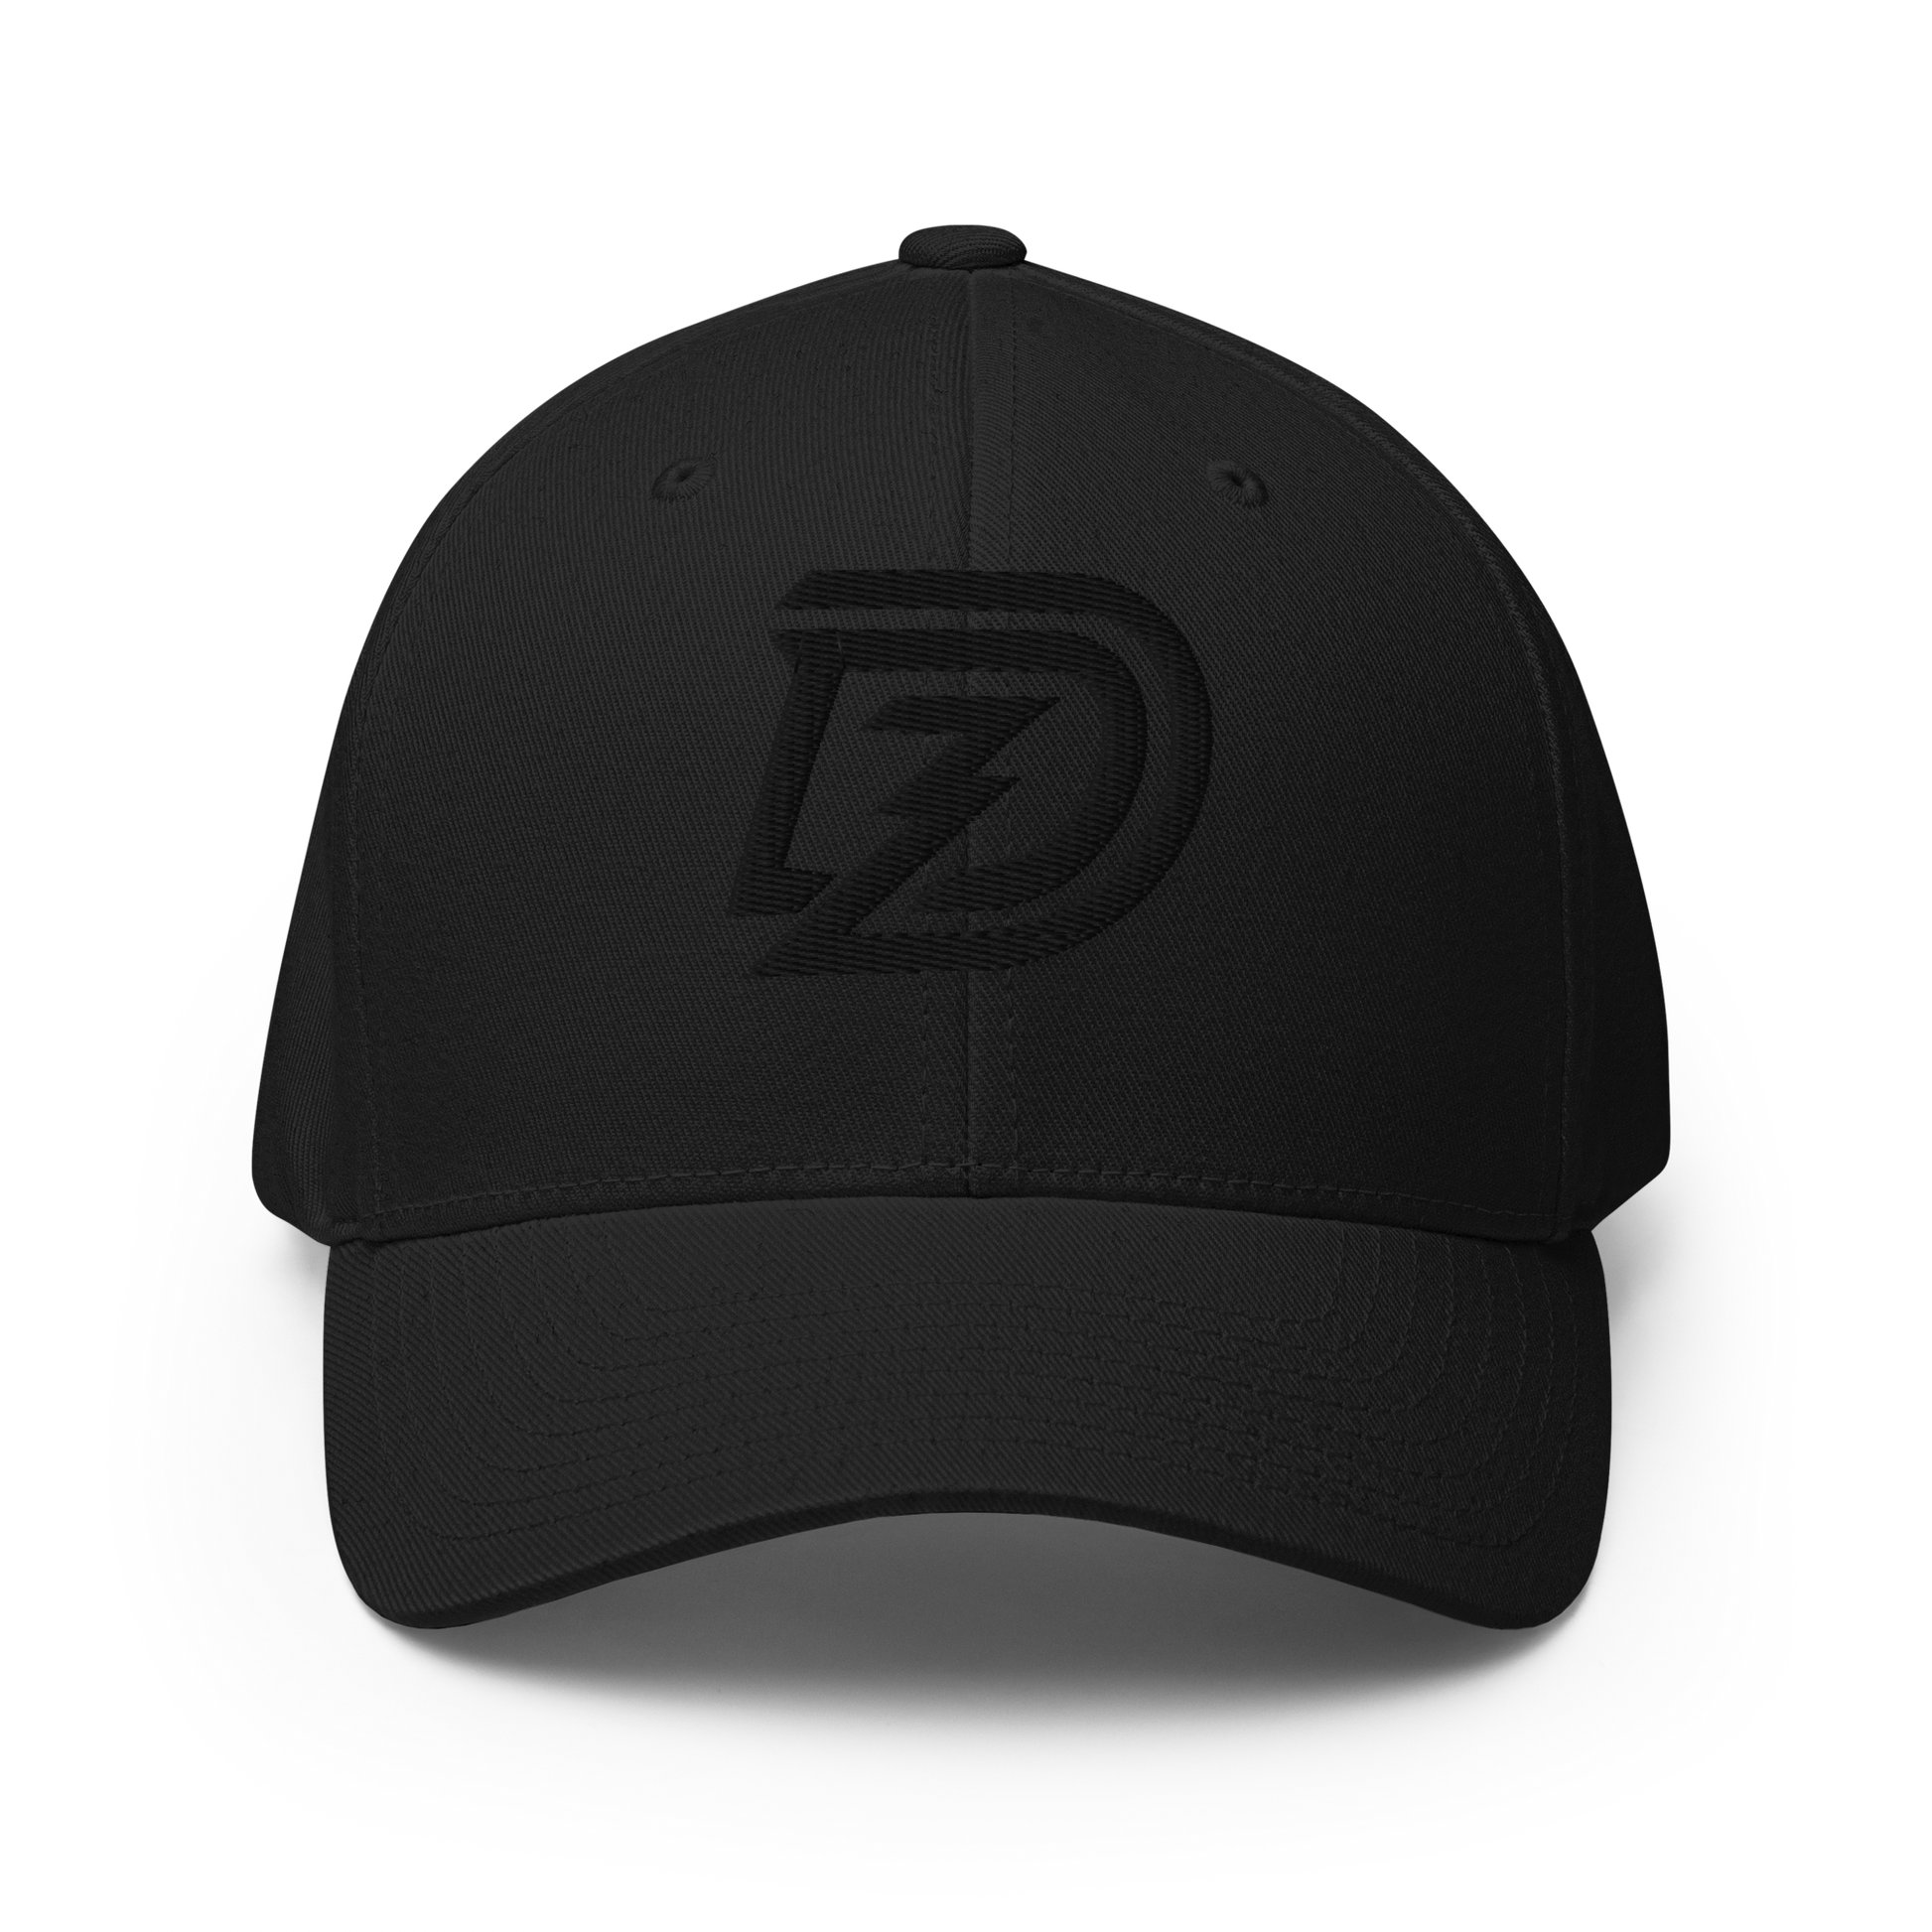 DZ Monochrome 3D Puff Flexfit Cap in Black